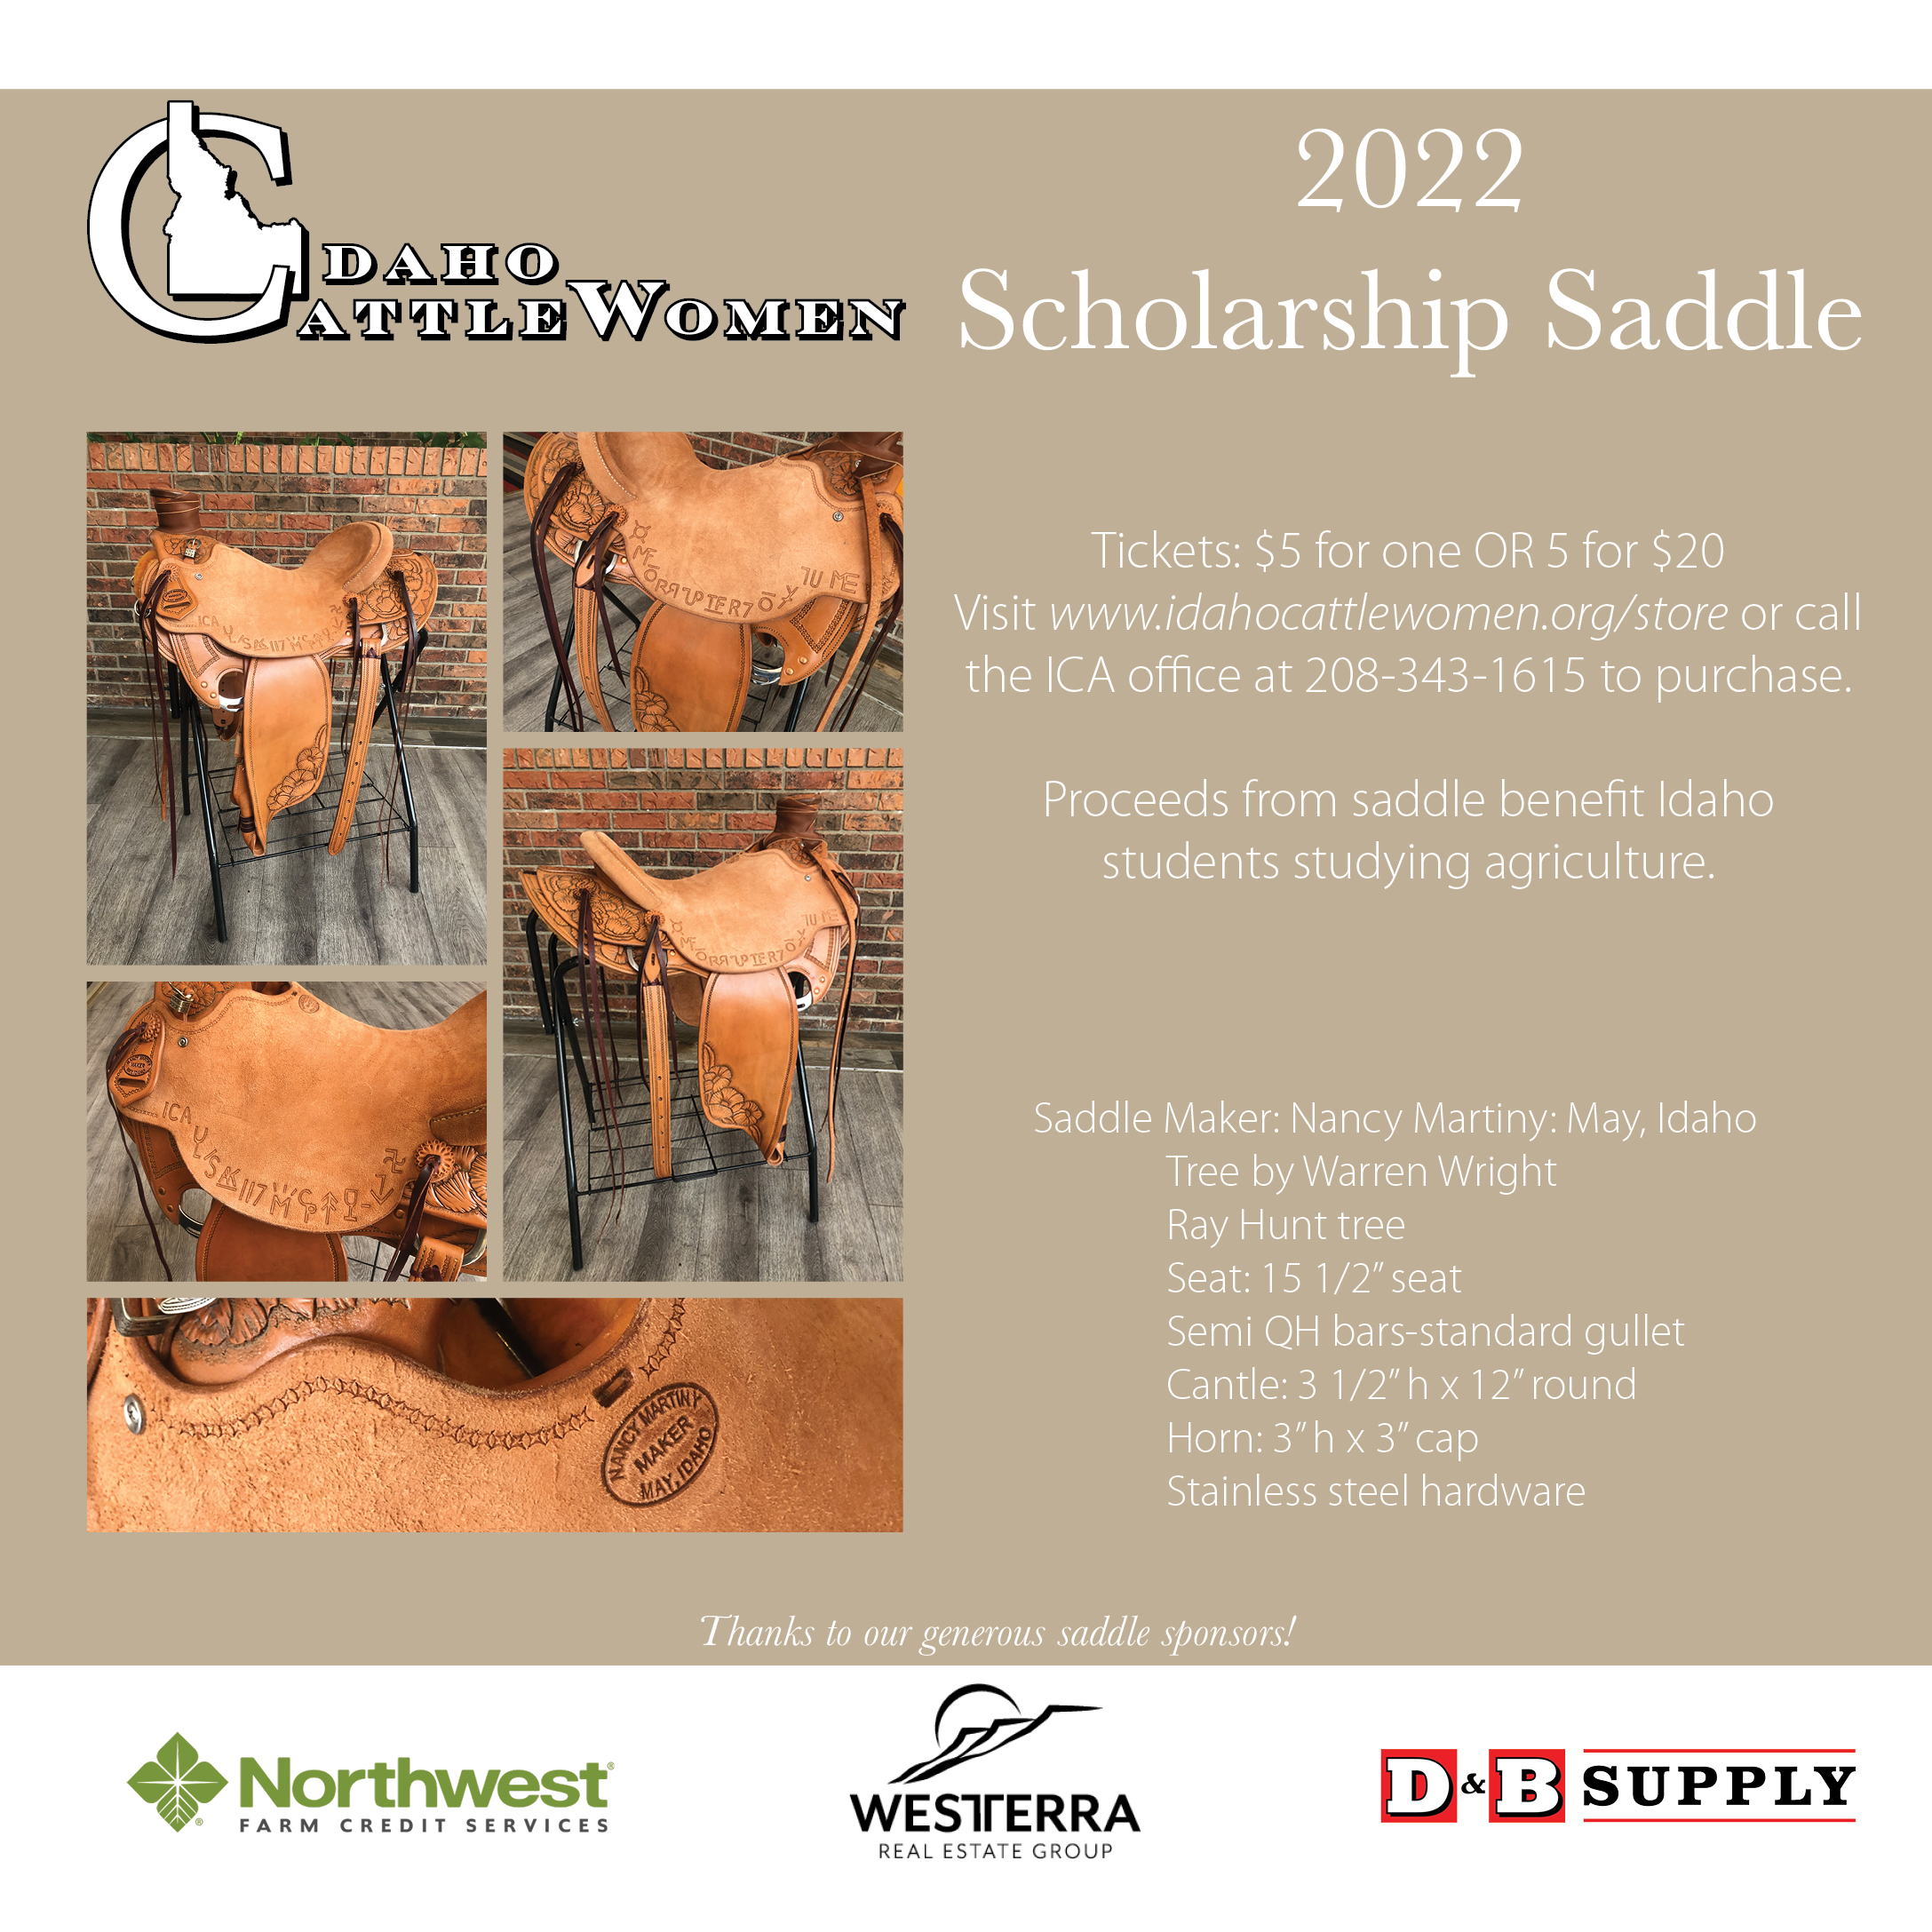 western saddle being raffled for scholarships